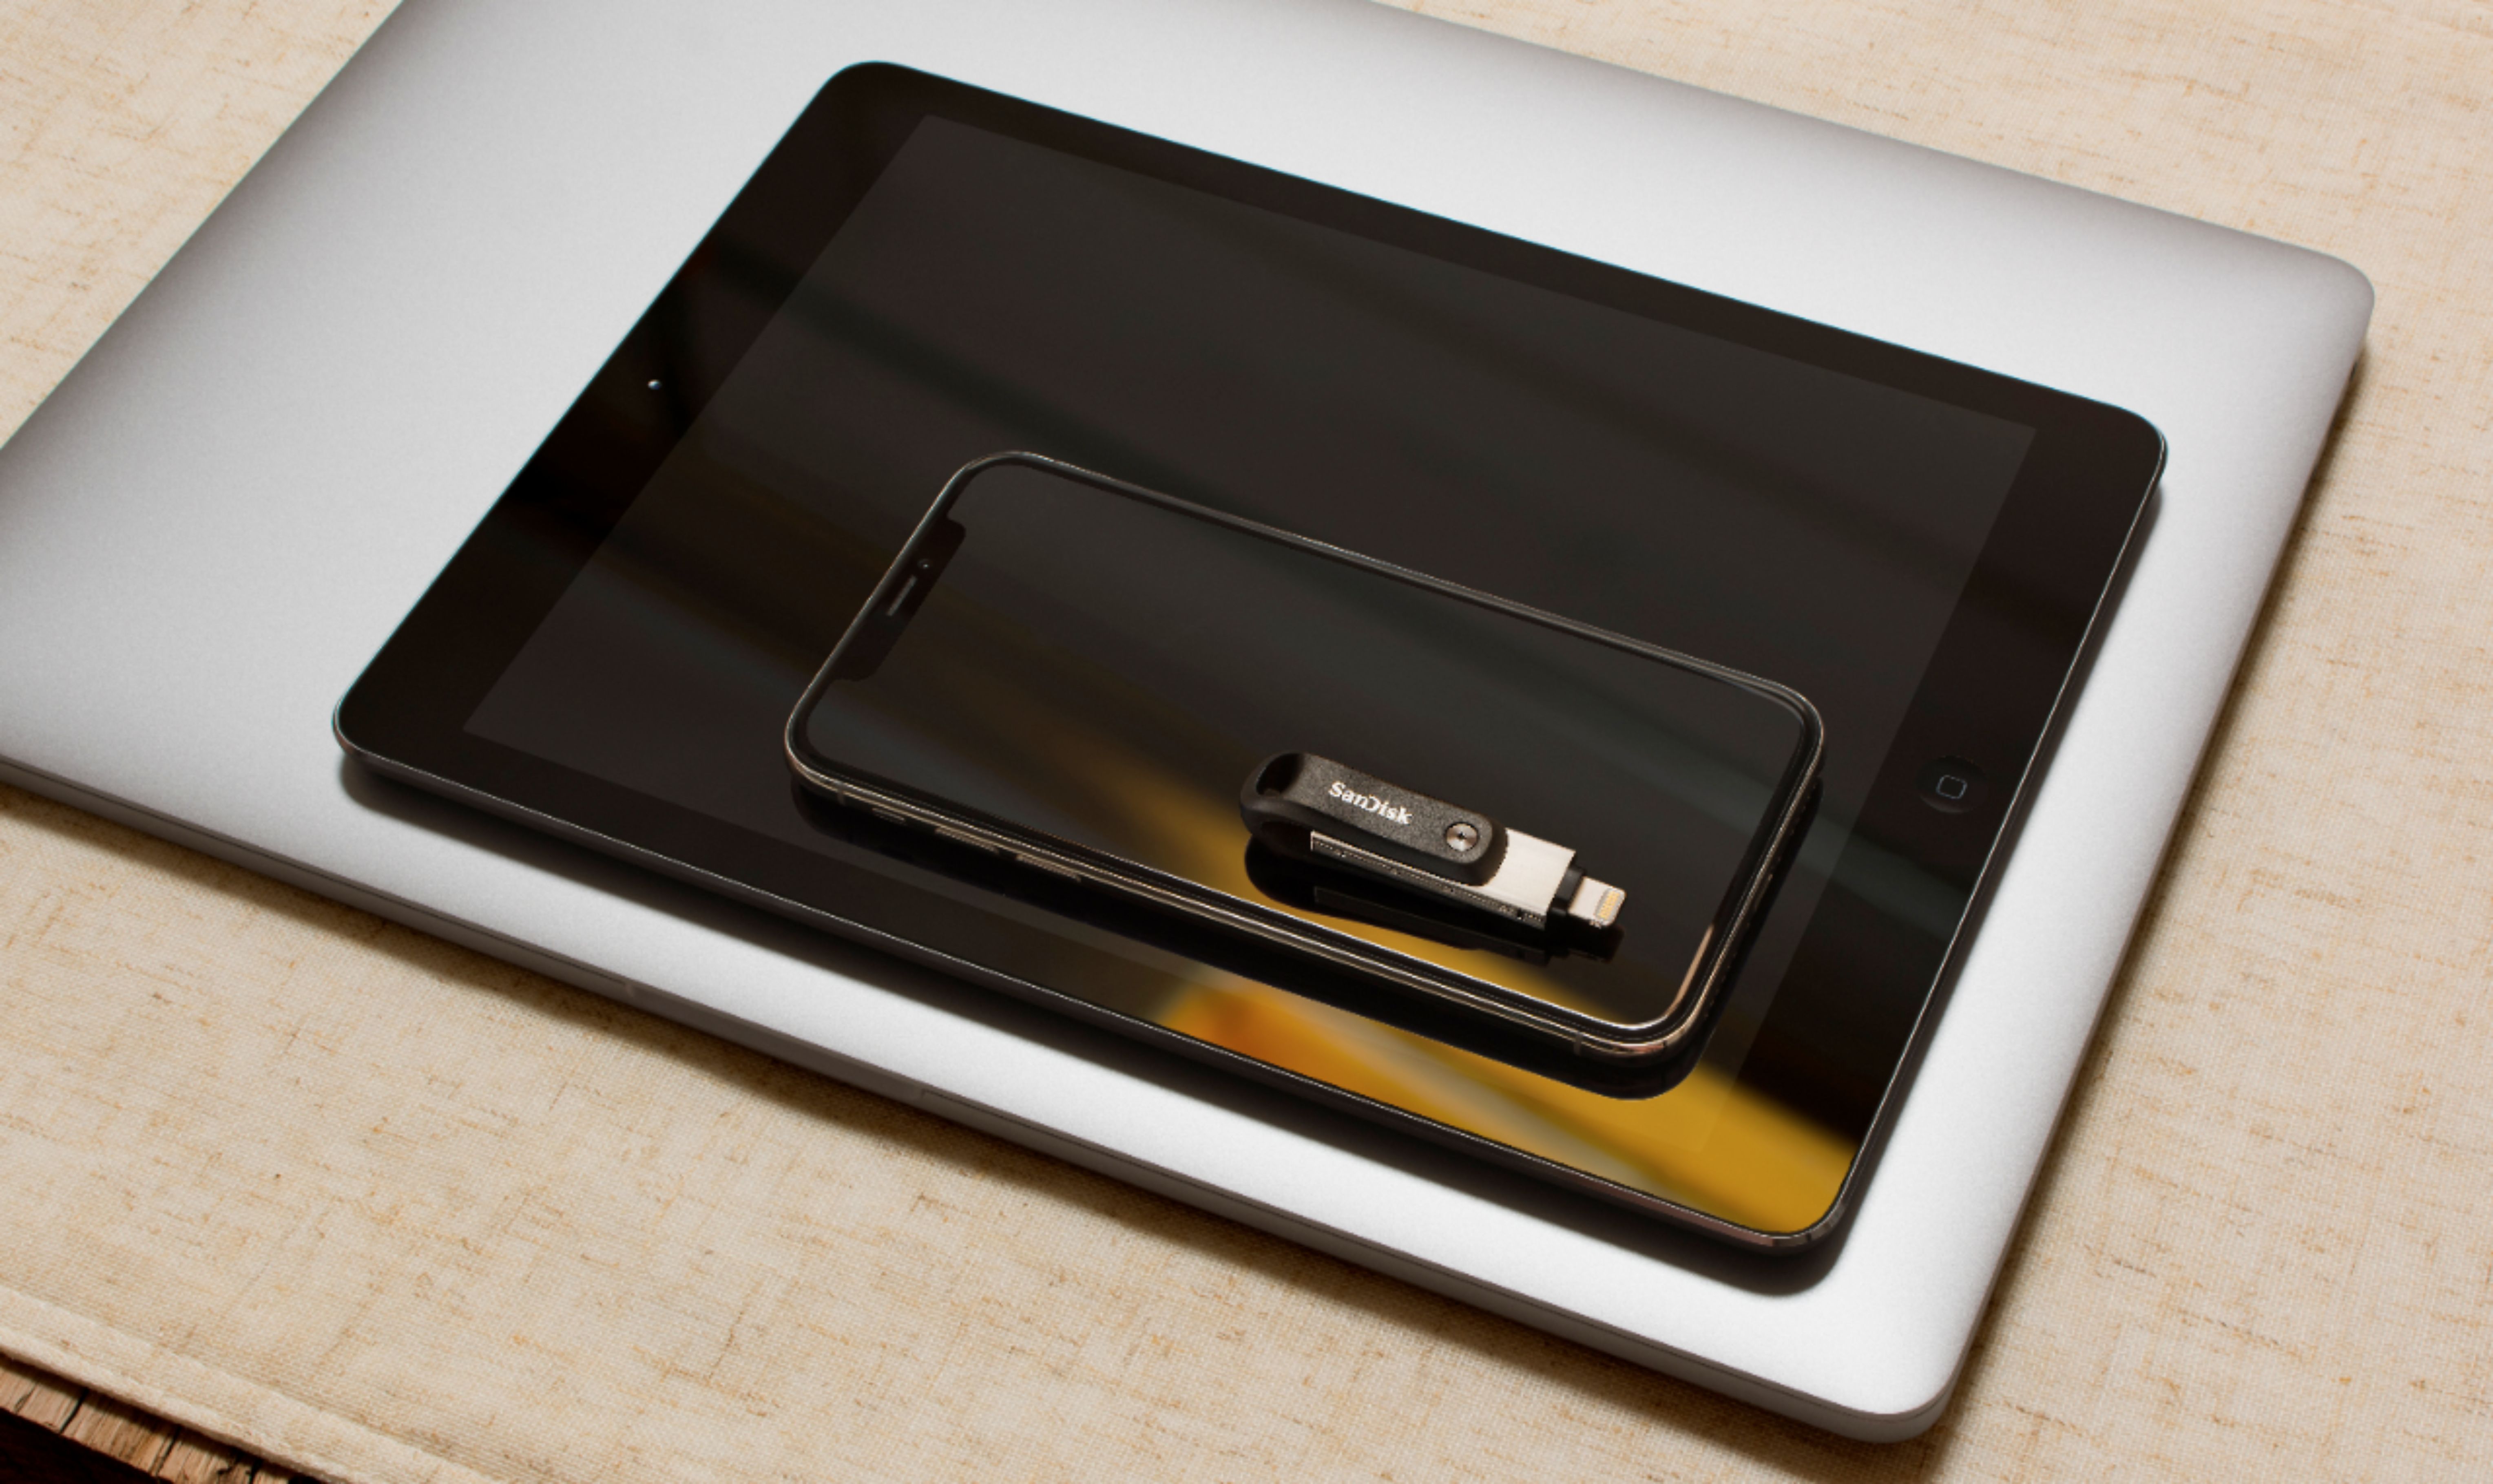 SanDisk 256GB iXpand Flash Drive Go - Apple (AE)